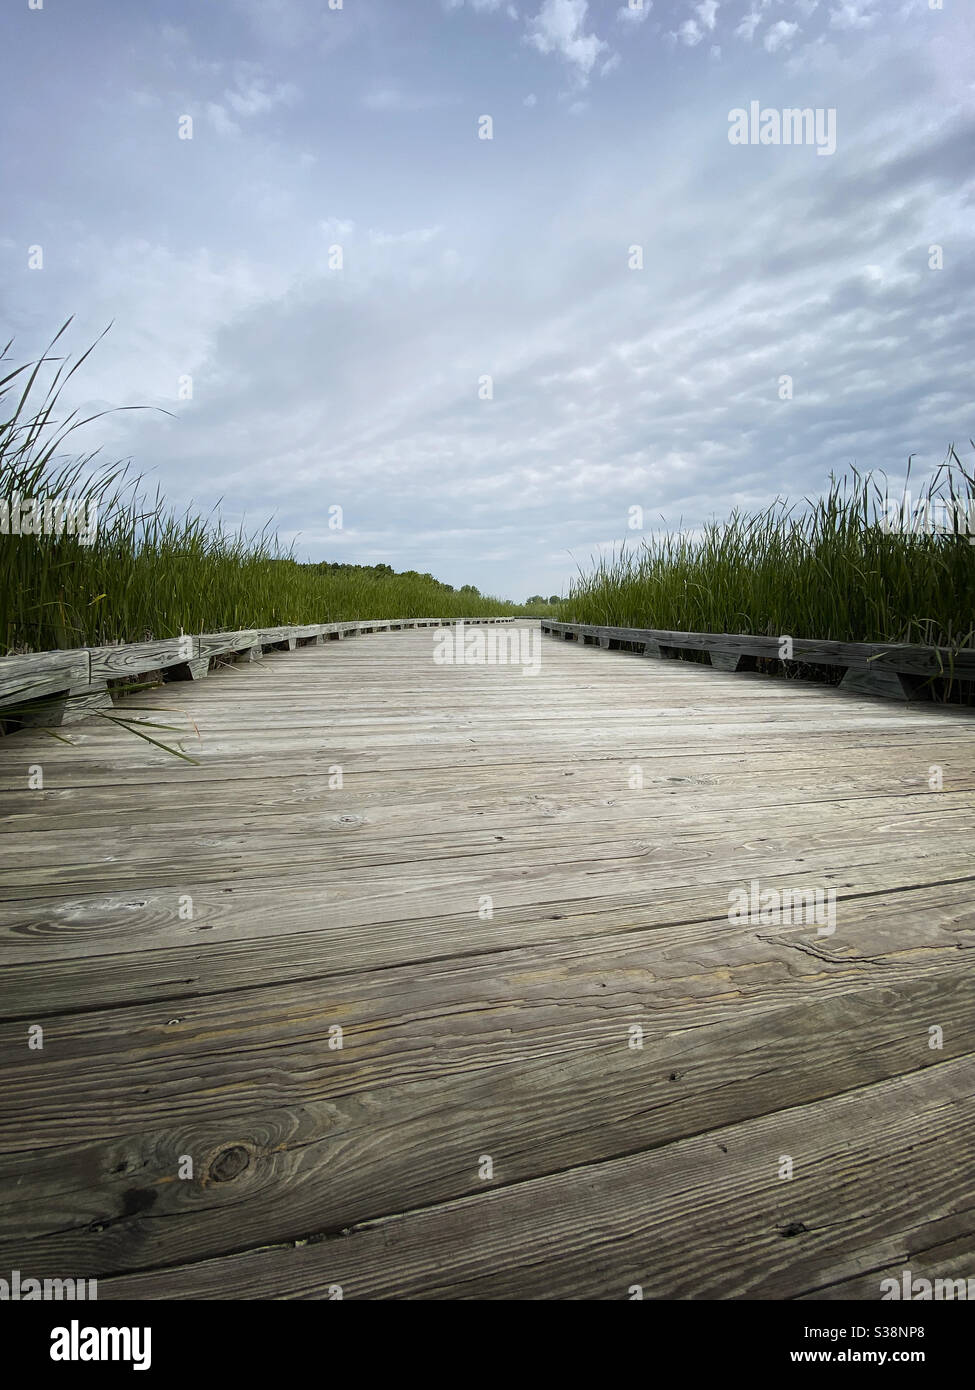 Wooden path in wetlands Stock Photo